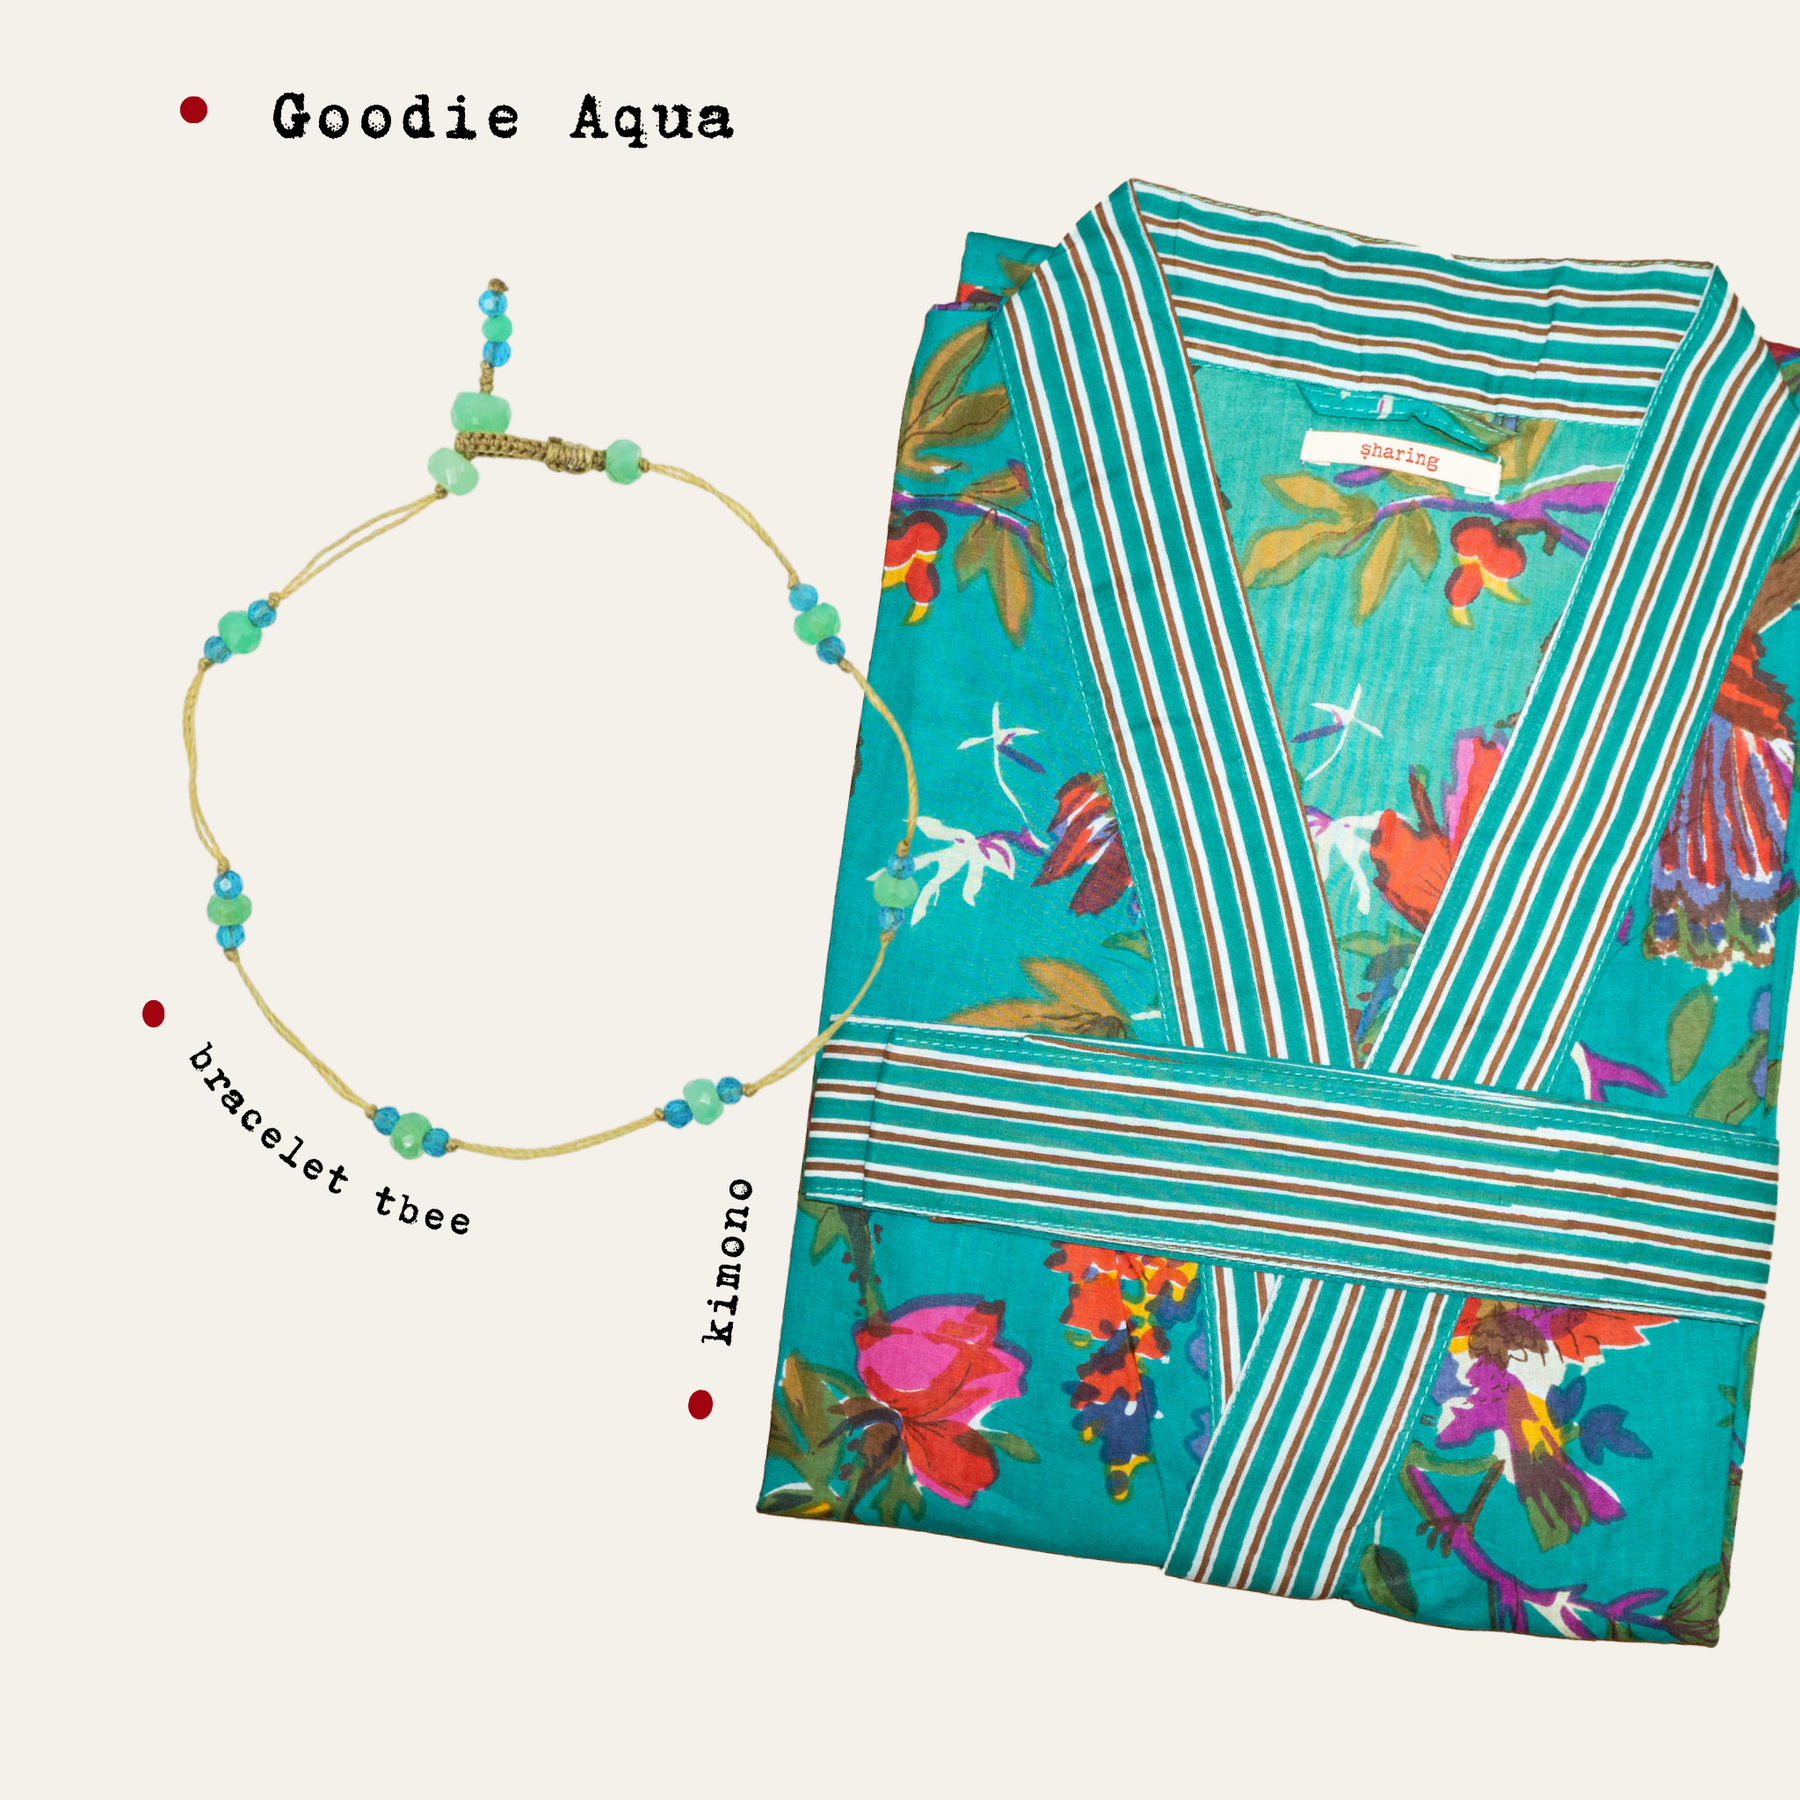 Summer Goodies - Goodie Aqua - Kimono Aqua & T.Bee Chrysoprase Apatite